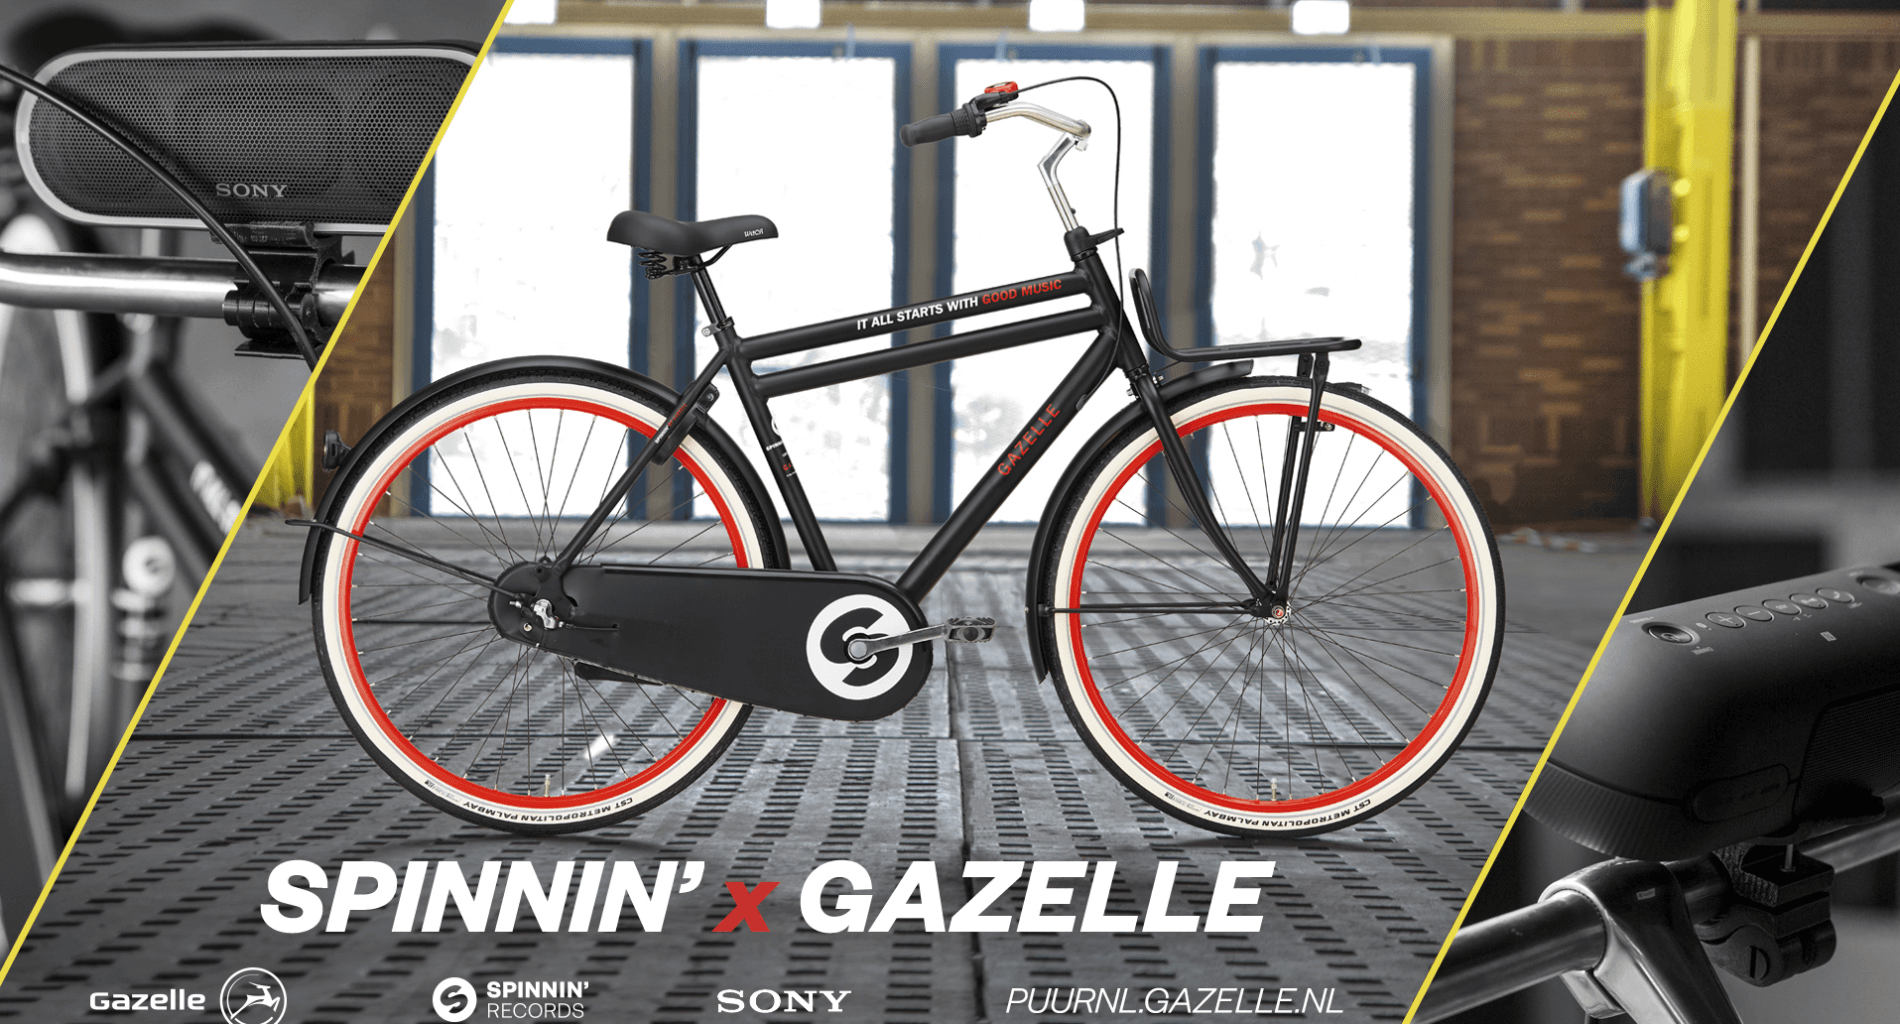 Spinnin' by Gazelle, a limited edition bike